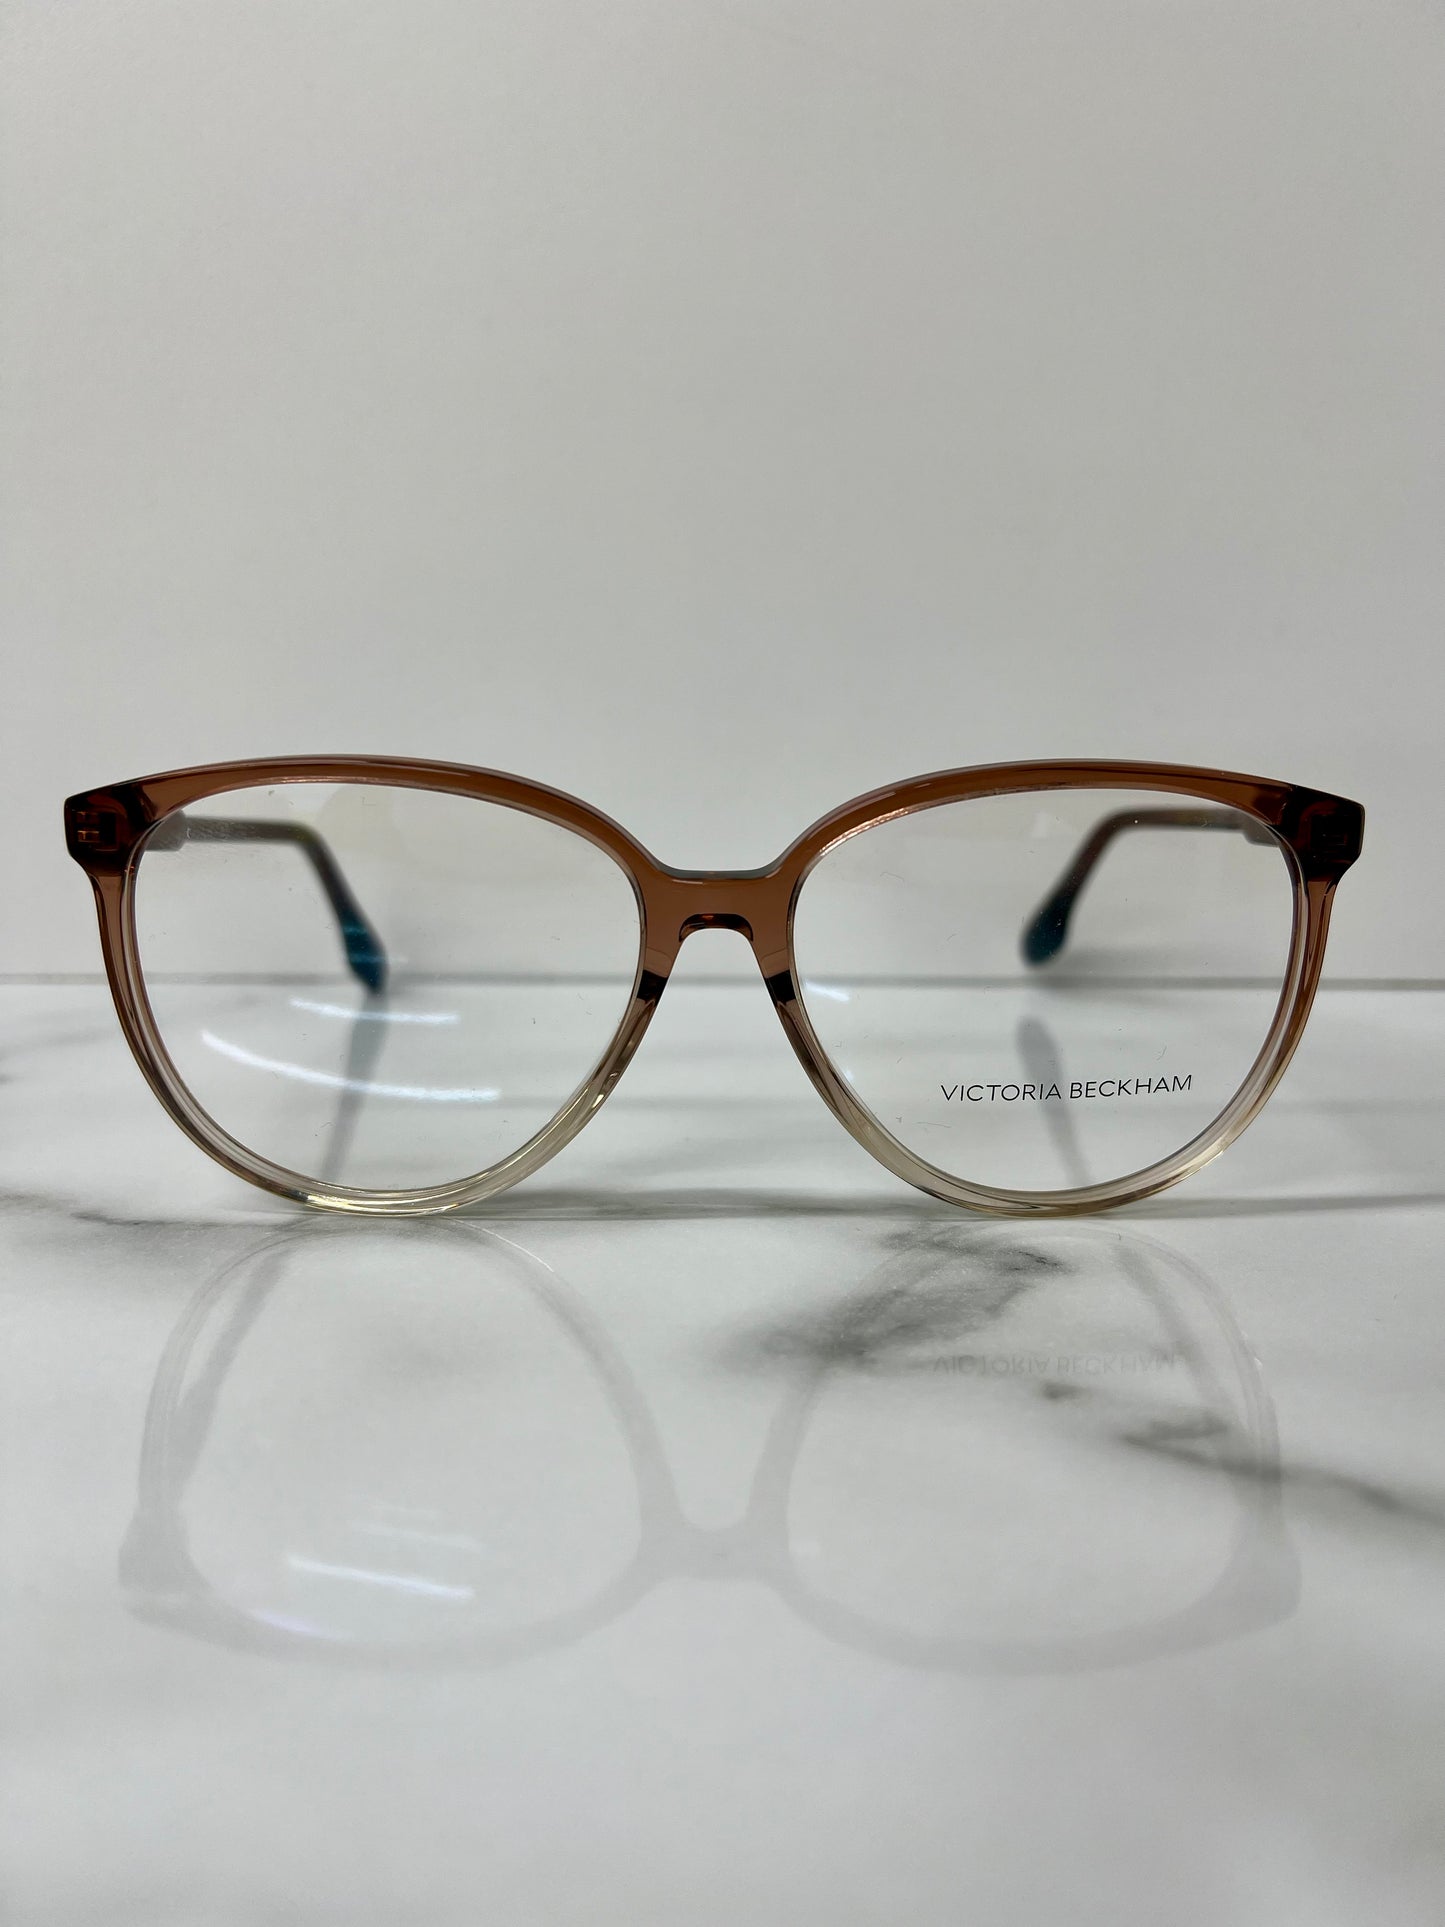 Victoria Beckham Glasses Frames Optical Women Clear Brown Eyeglasses VB2619